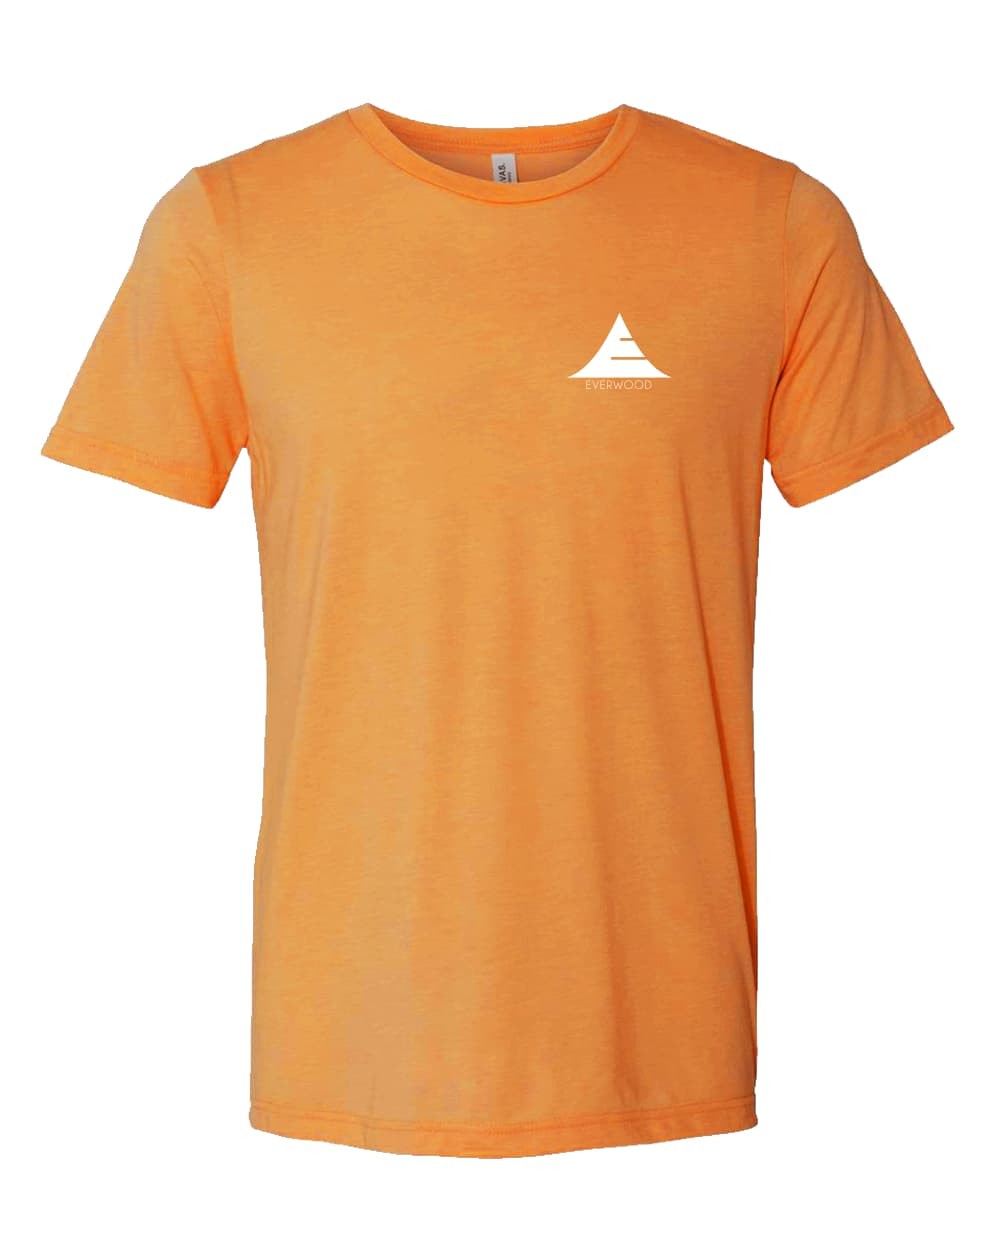 Everwood Watch Company Icon Logo Tri-Blend Short Sleeve Shirt Orange